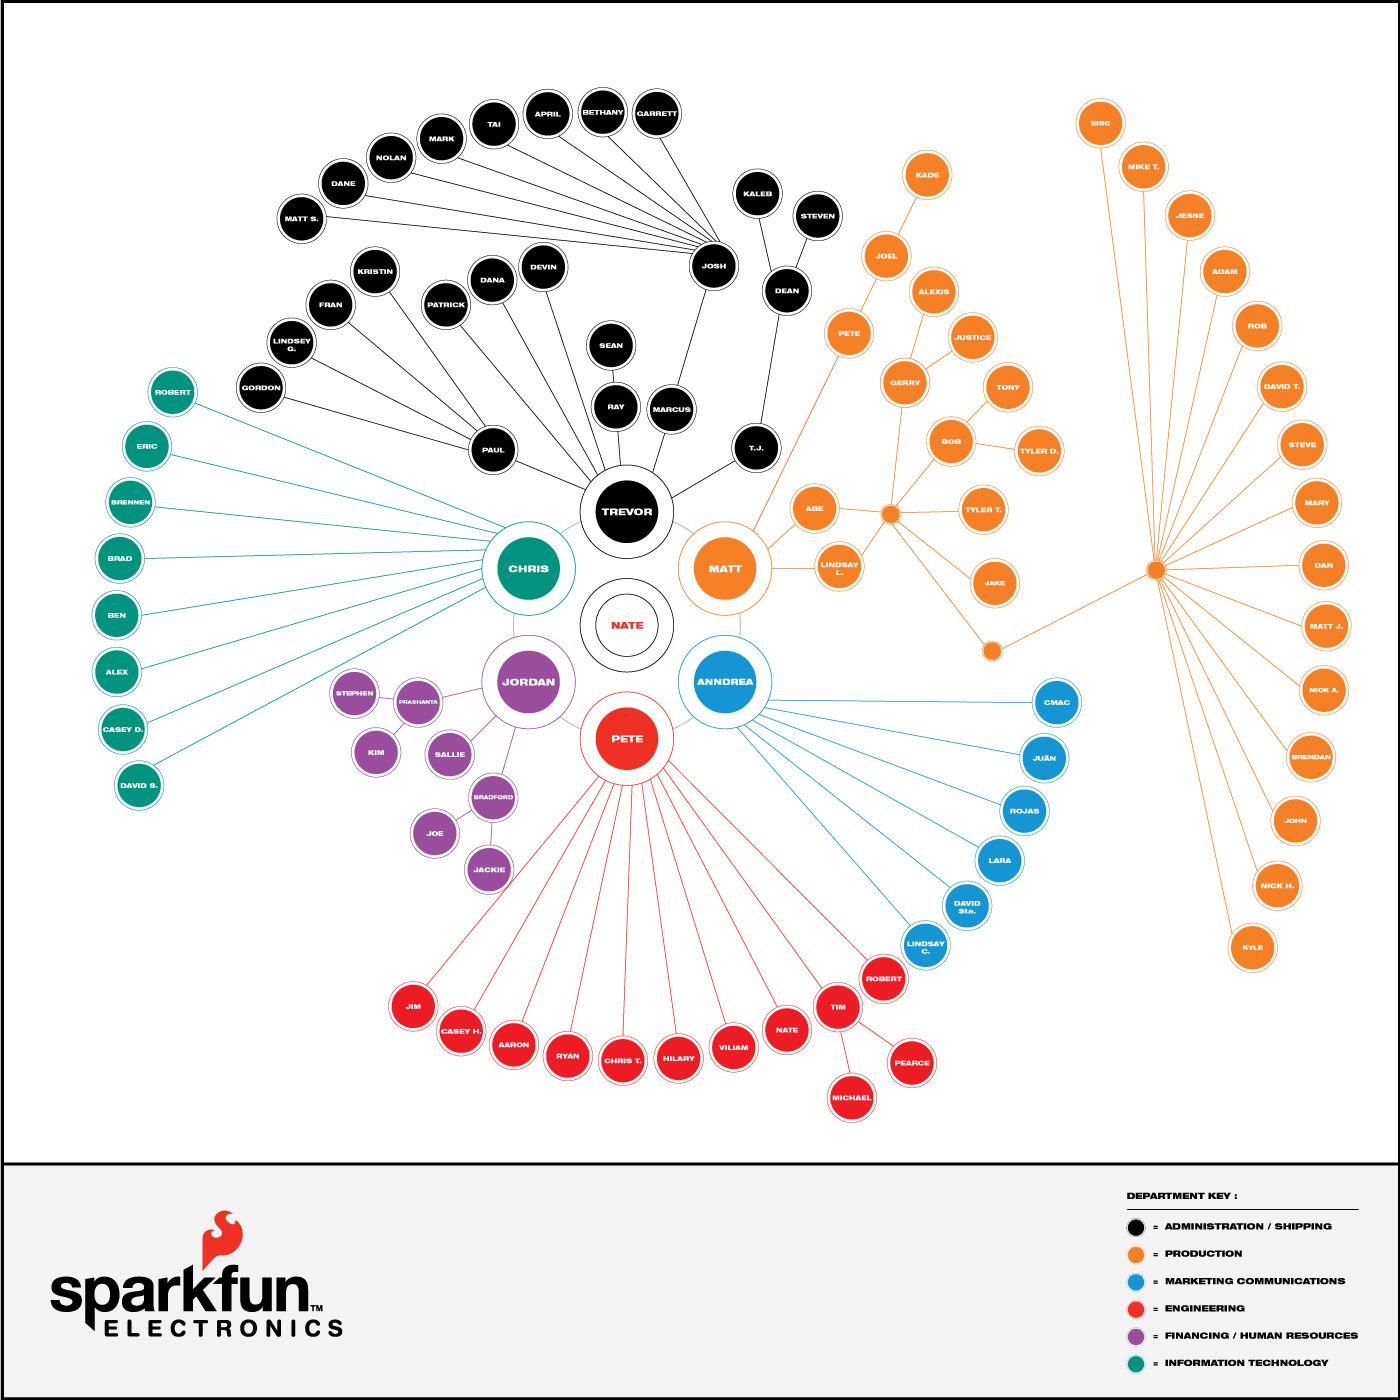 sparkfun electronics org chart template